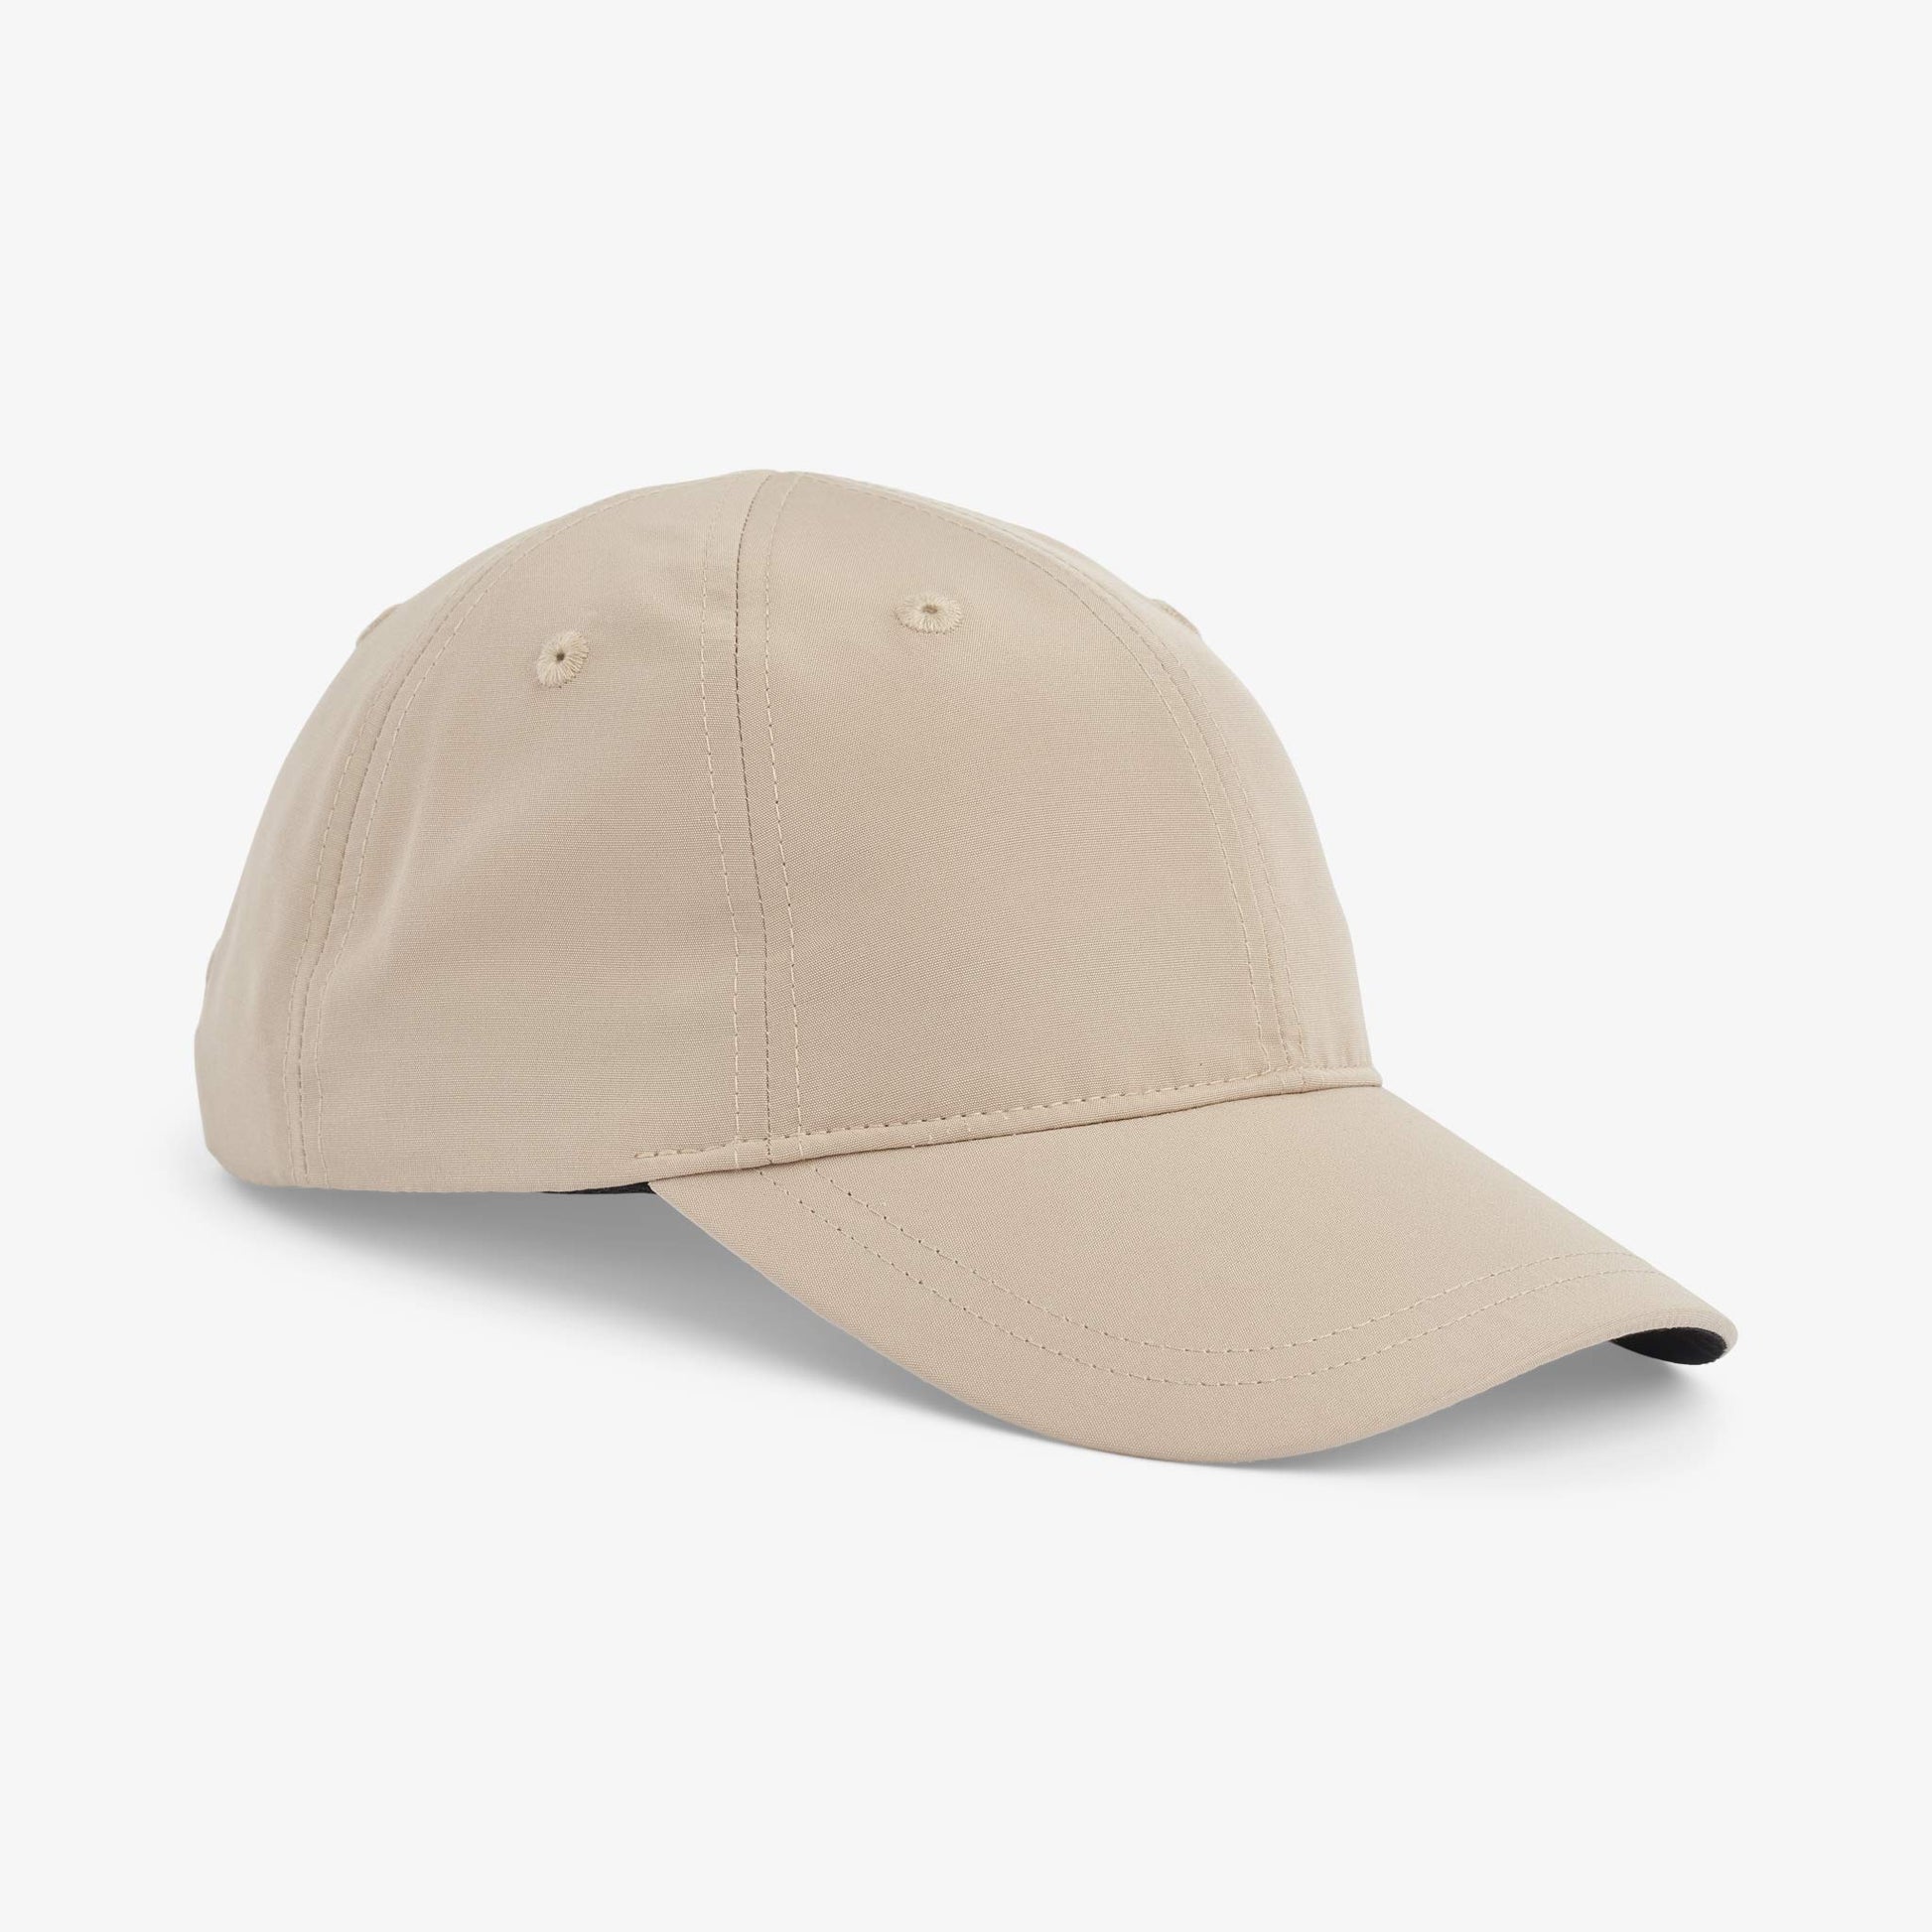 Actiivate - FIERCE Soft Baseball Cap - Khaki - Headz Up 